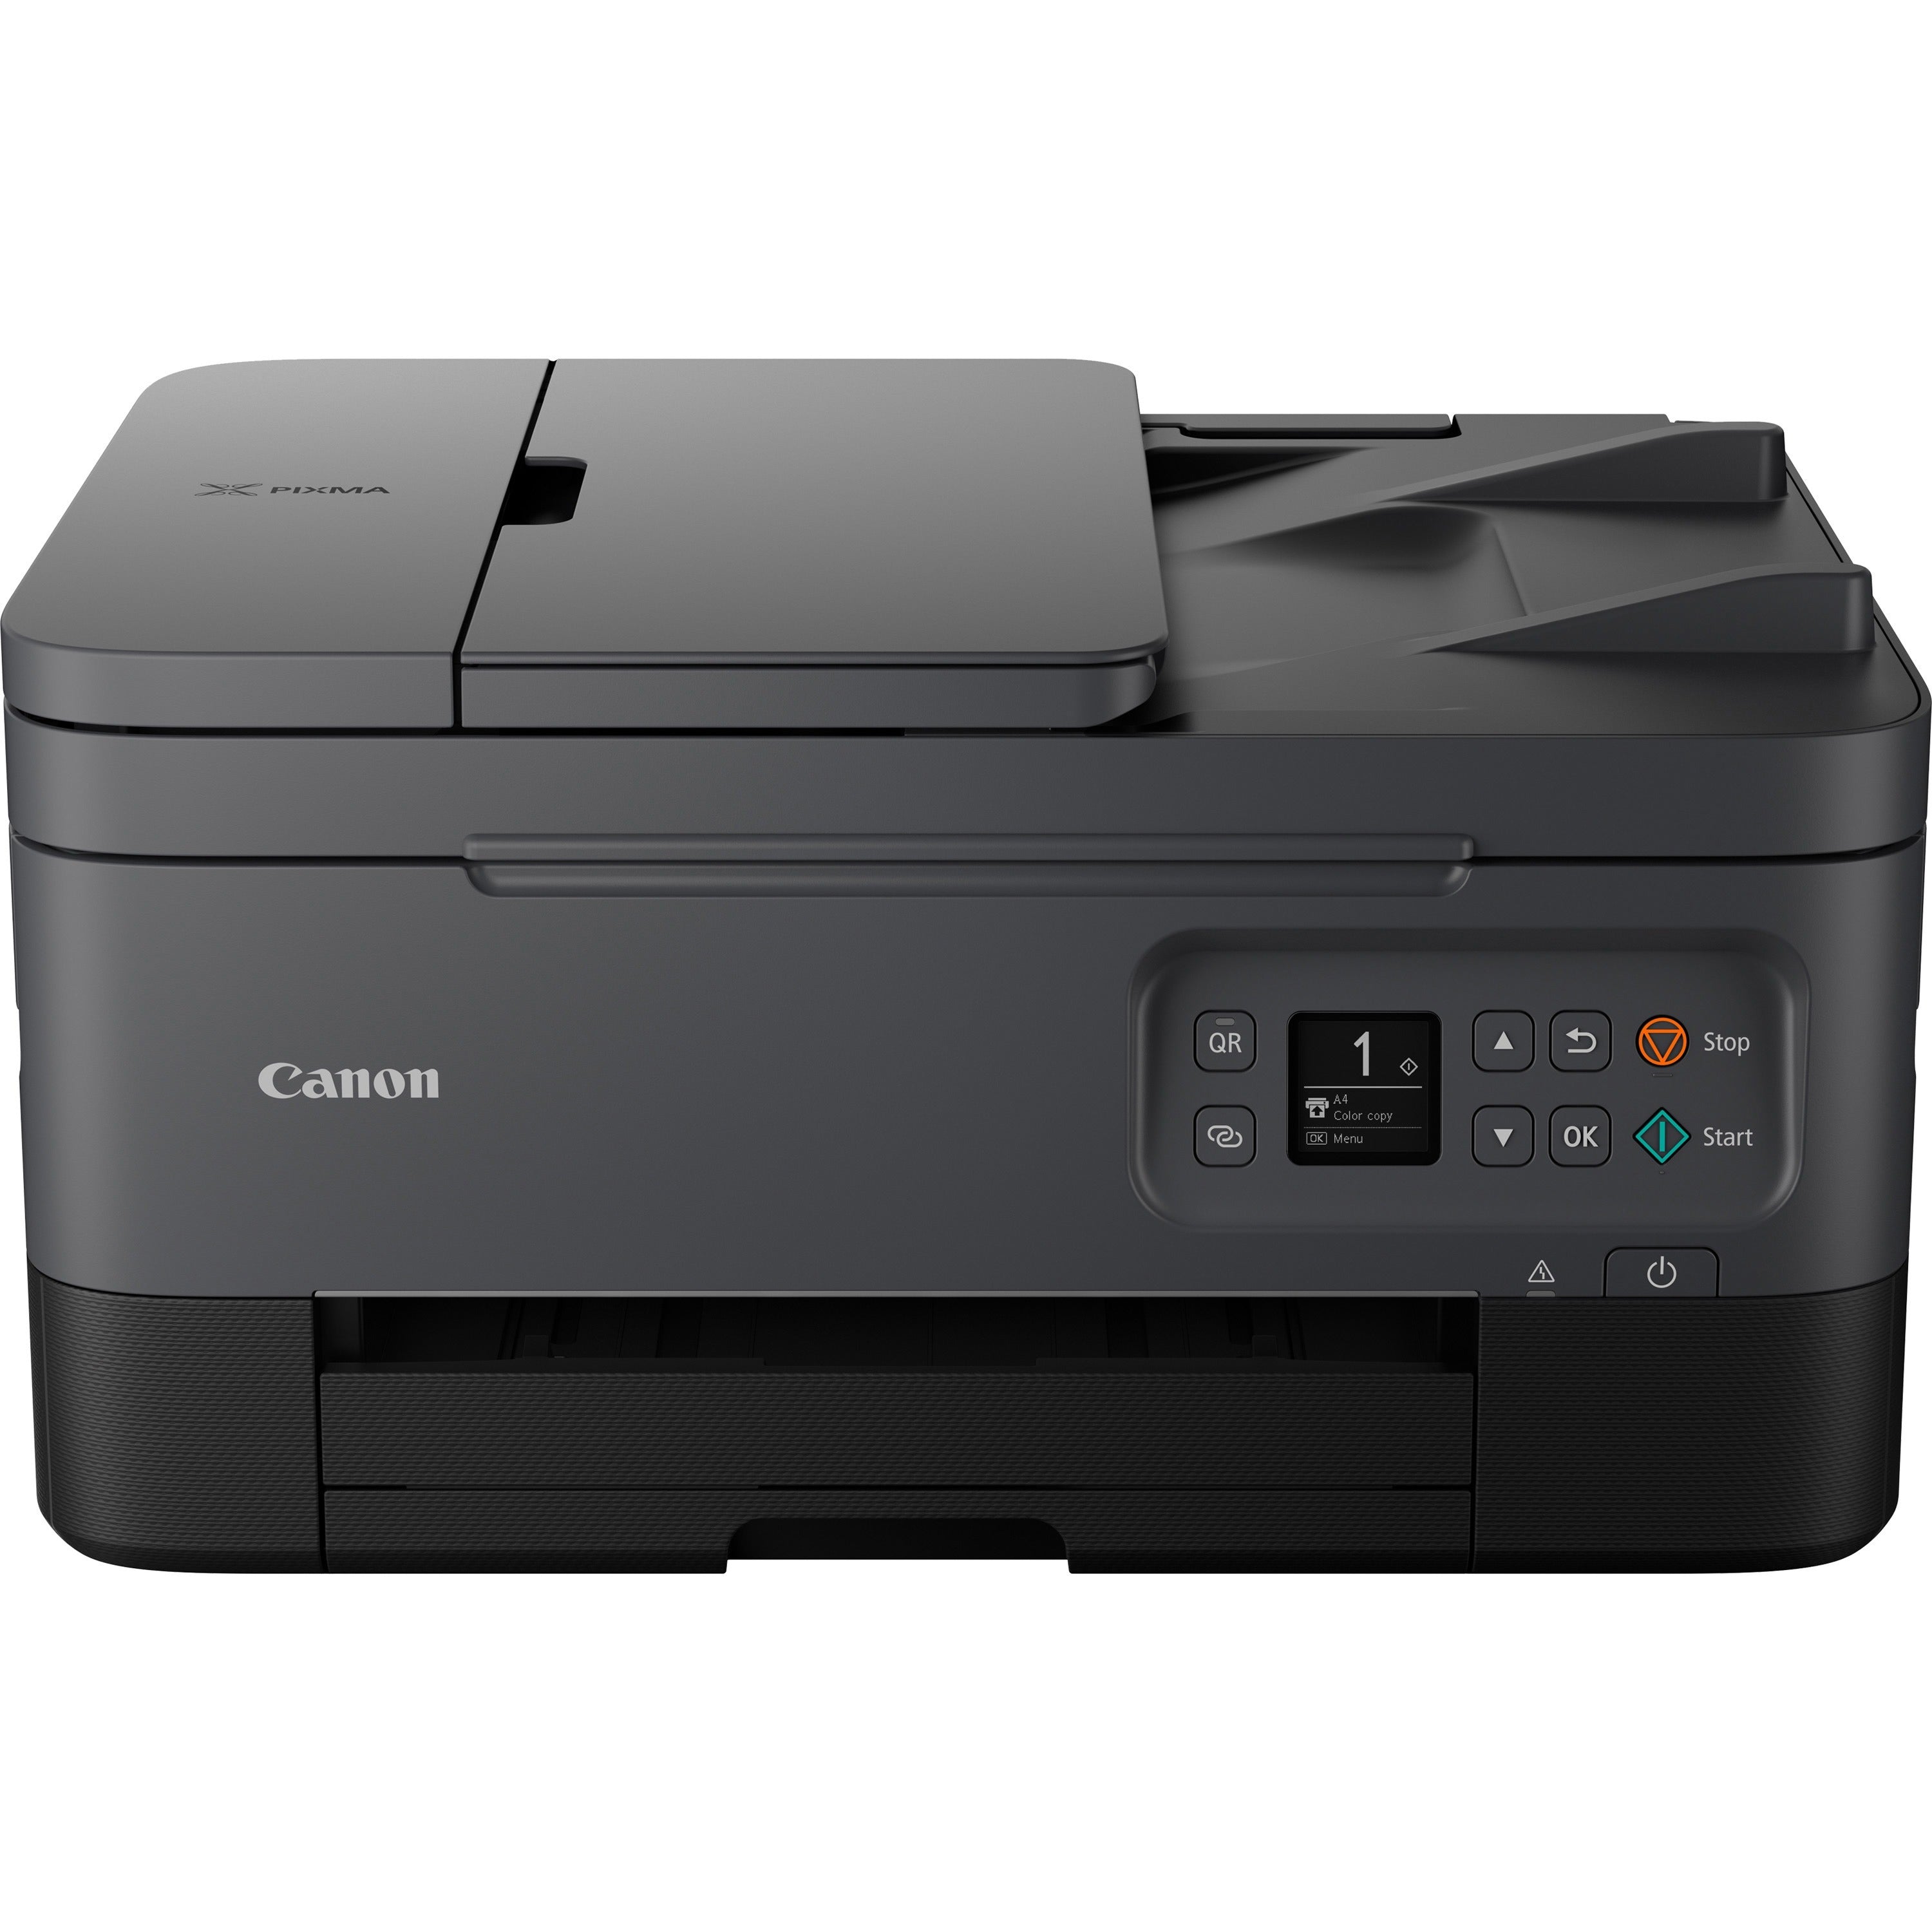 canon-tr7020a-wireless-inkjet-multifunction-printer-color-black-copier-printer-scanner-4800-x-1200-dpi-print-color-scanner-wireless-lan-wireless-pictbridge-usb-1-each-for-photo-print_cnmtr7020a - 1